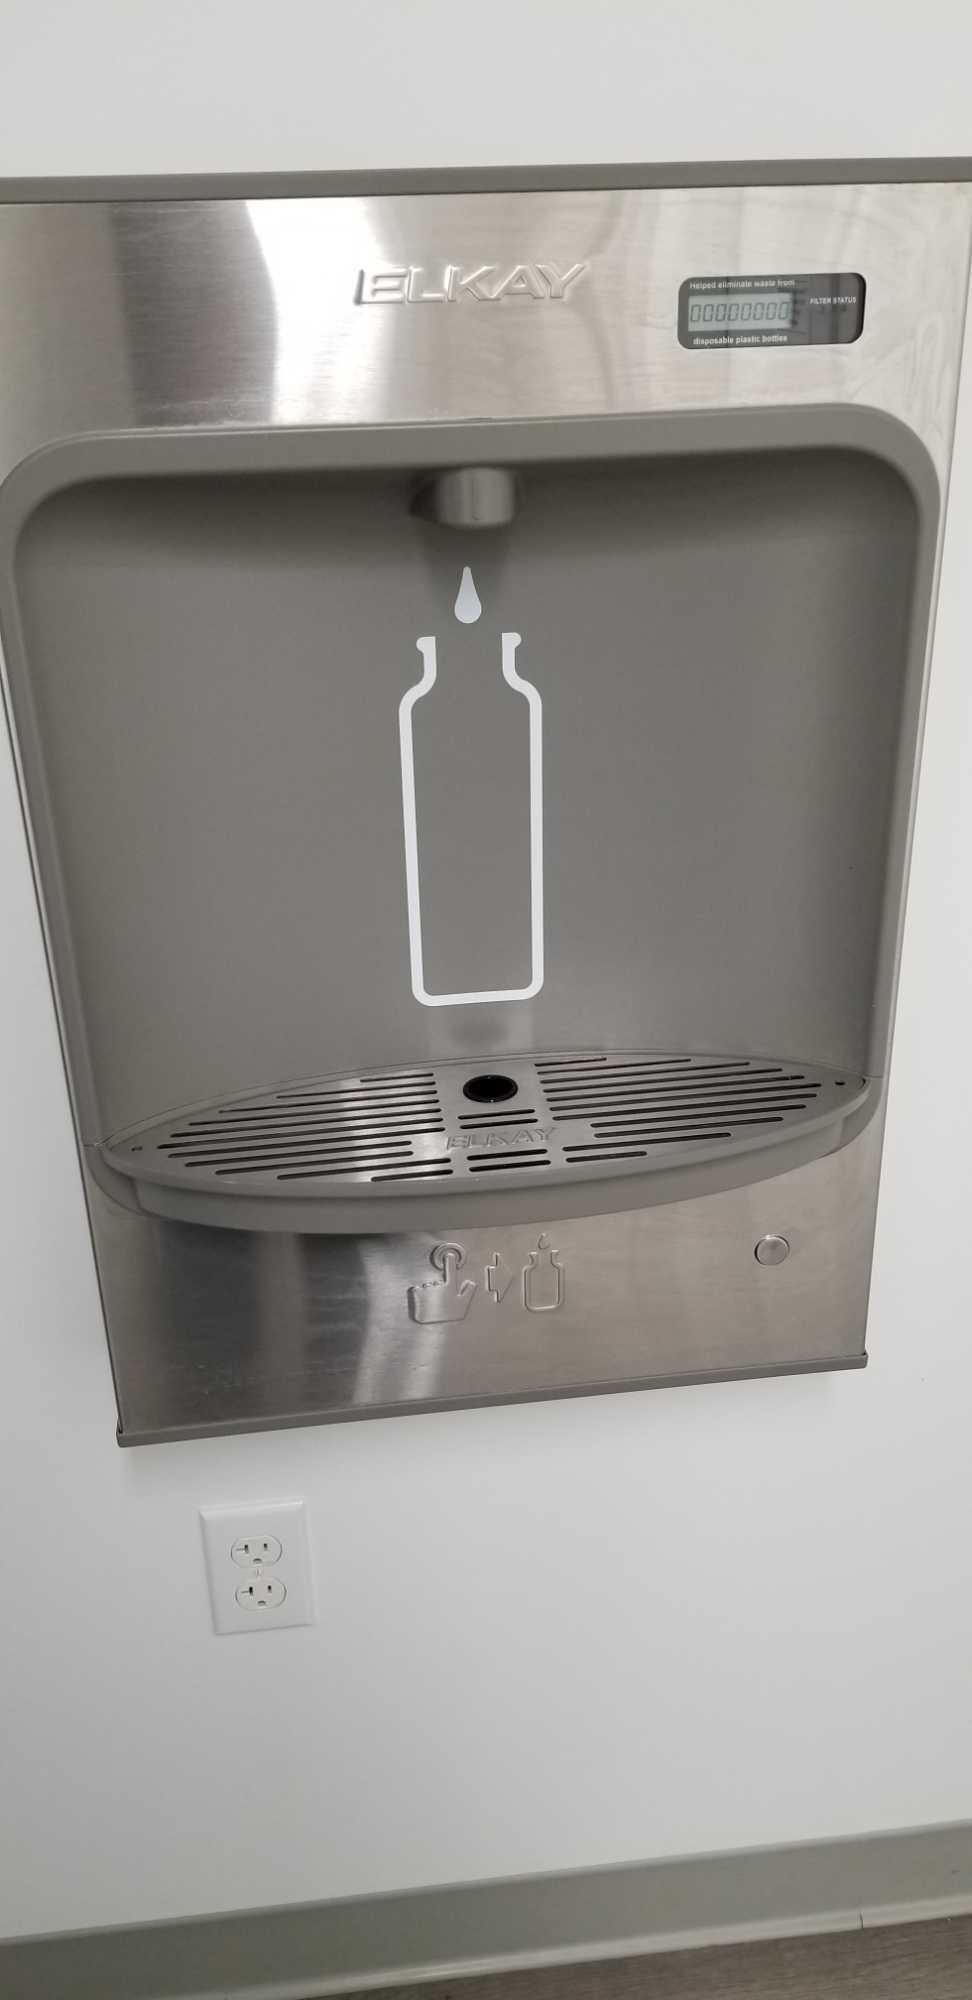 ELKAY Water dispenser